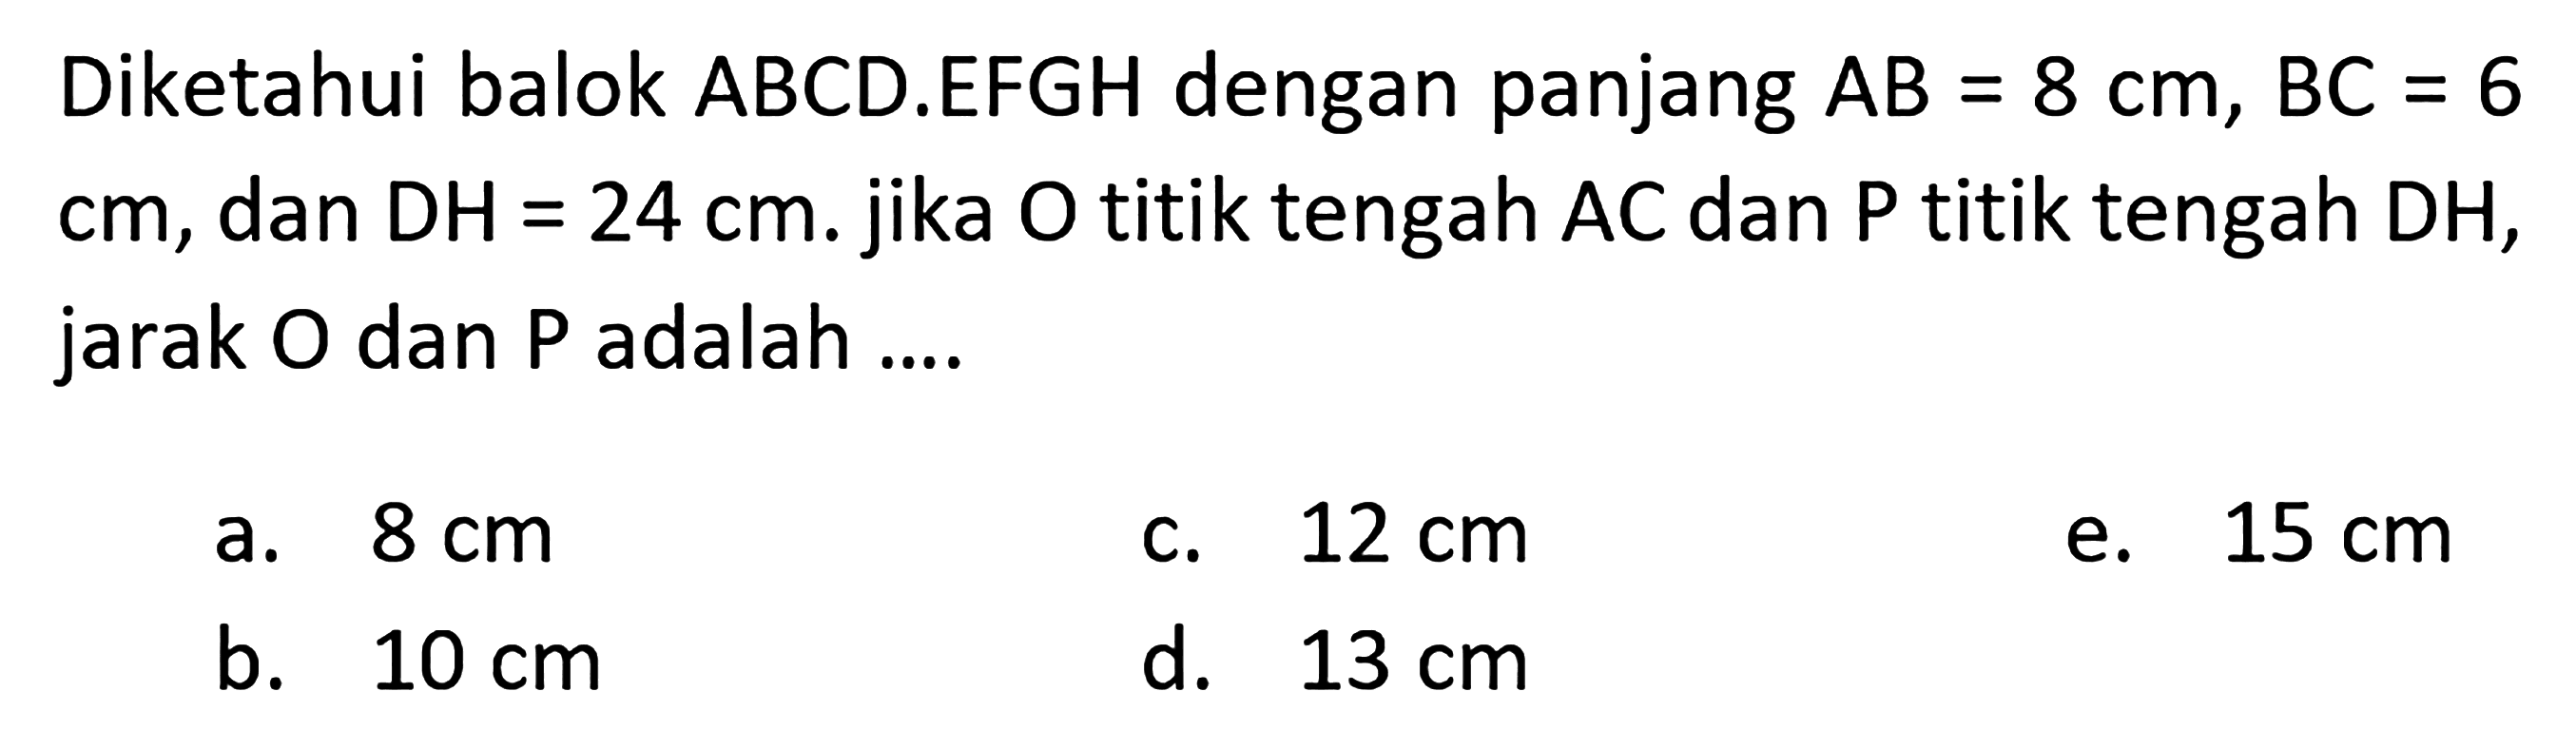 Diketahui balok ABCD.EFGH dengan panjang AB = 8 cm, BC = 6 cm, dan DH = 24 cm. jika O titik tengah AC dan P titik tengah DH, jarak O dan P adalah....